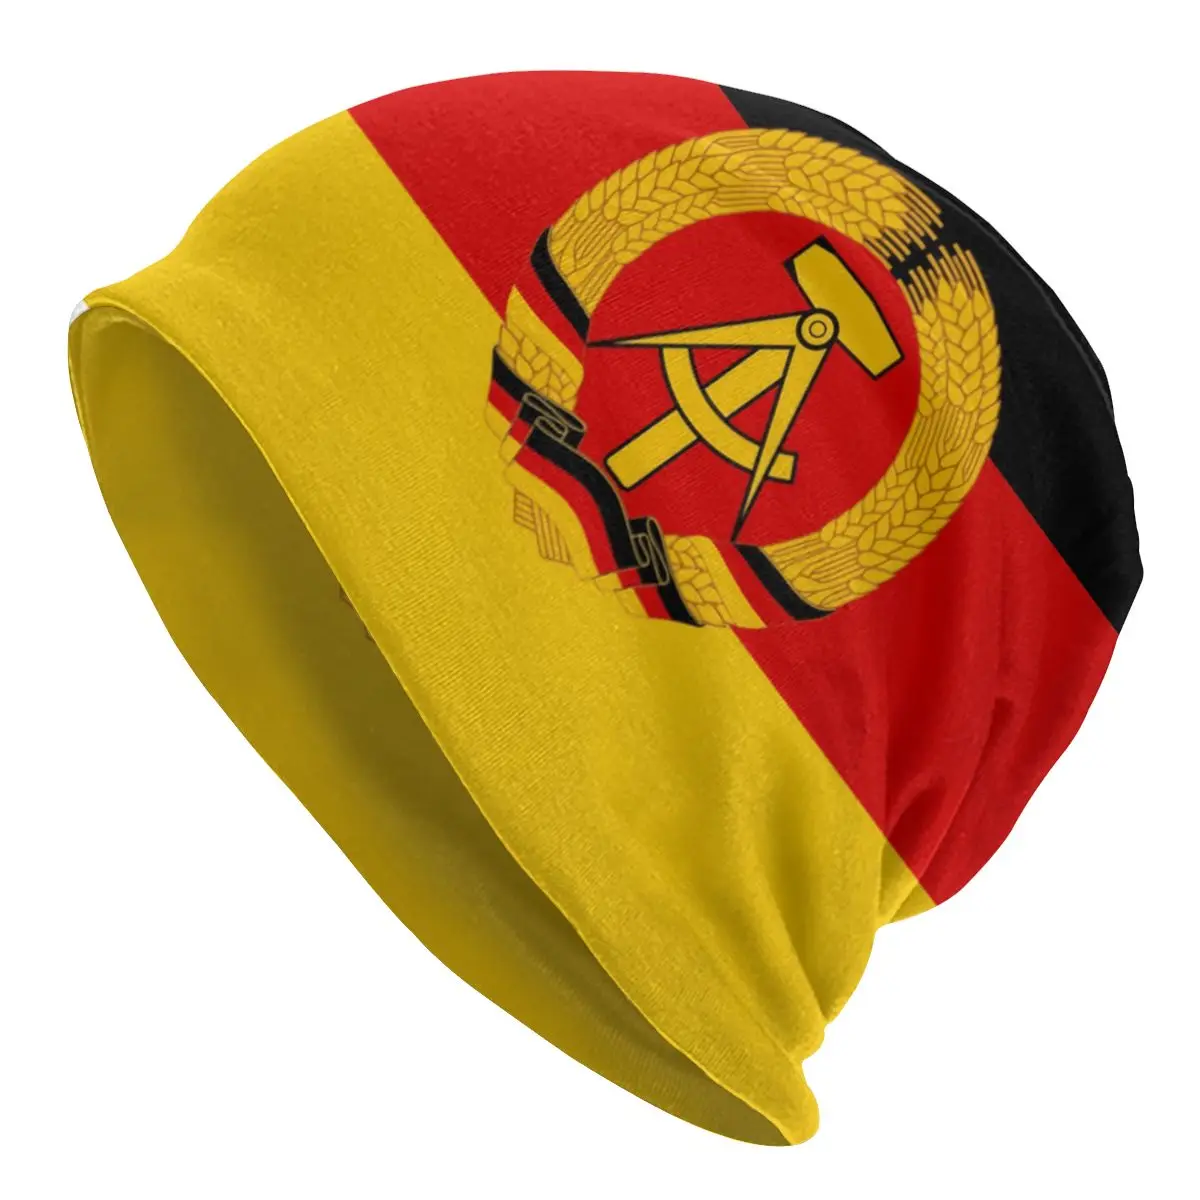 Flag Of East Germany Bonnet Homme Street Knitting Hat Warm Winter Deutschland Berlin German Patriotic Coat of Arms Beanies Caps